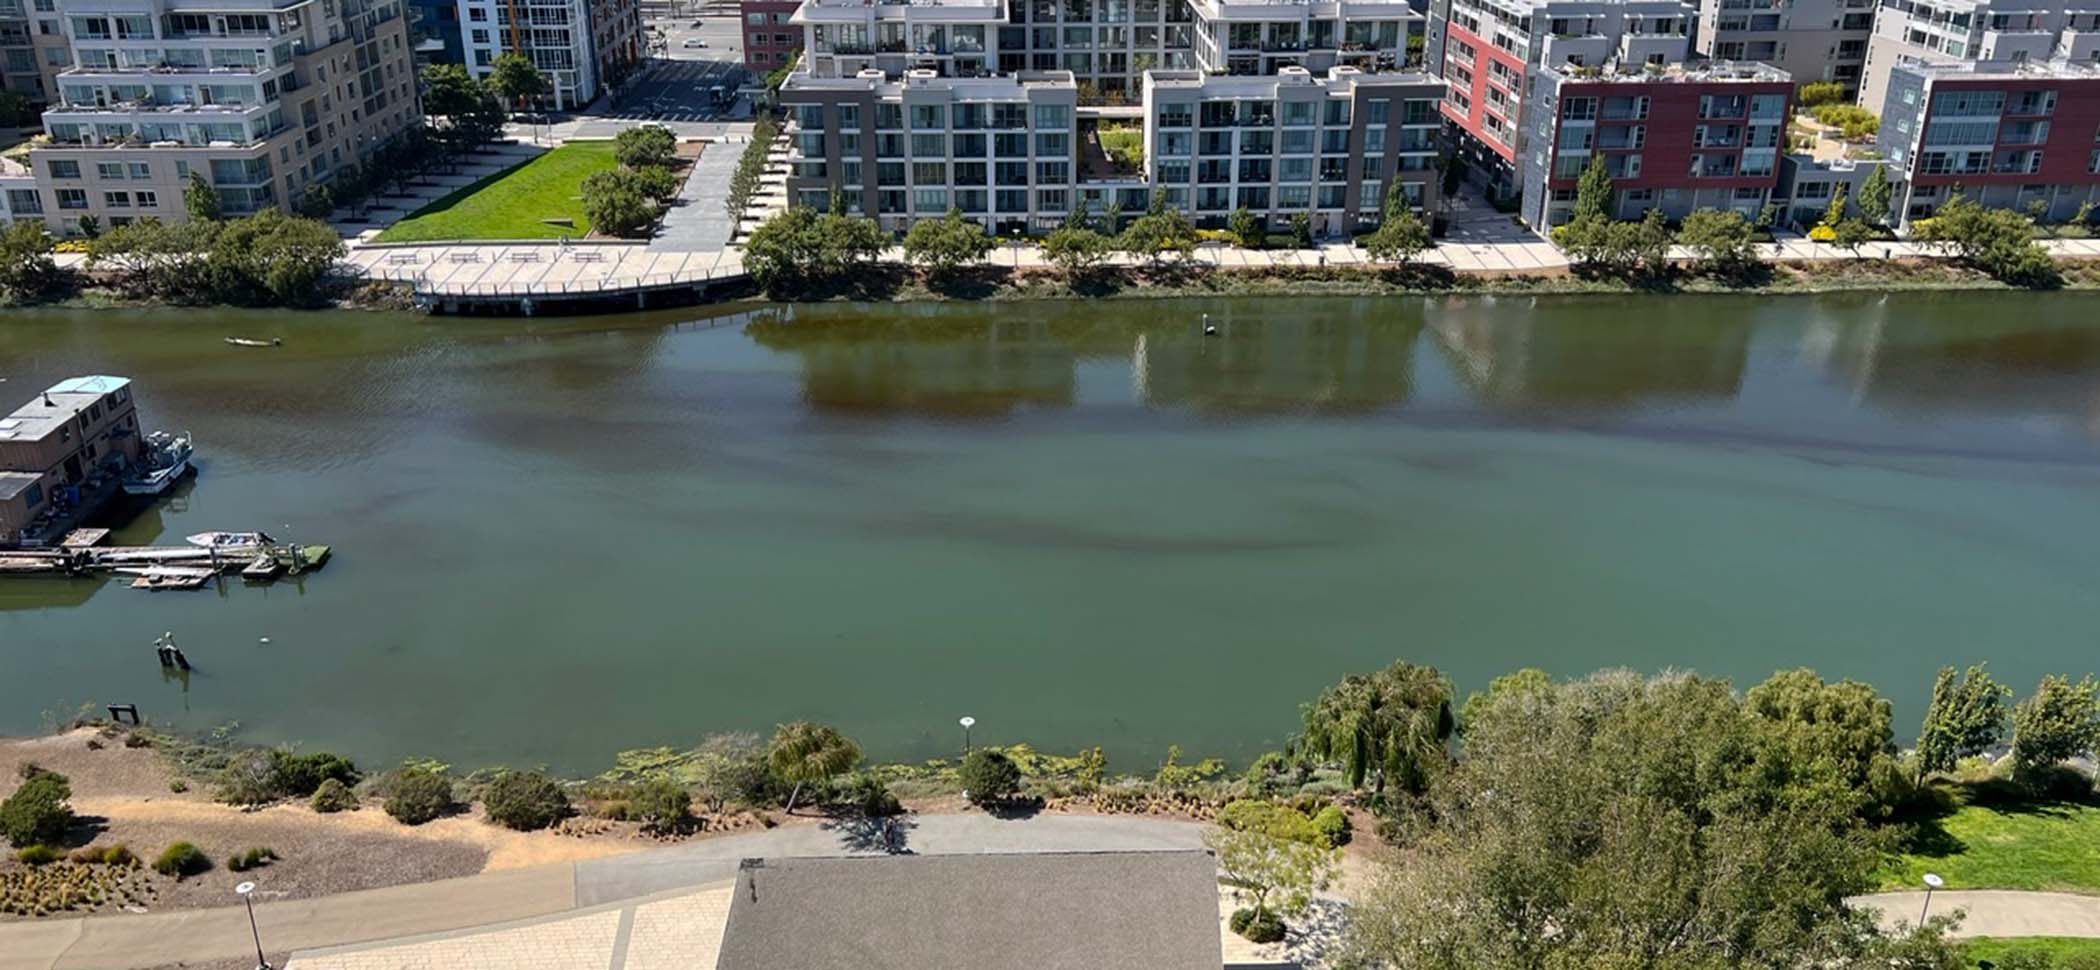 Harmful Algae Bloom in Mission Creek in San Francisco